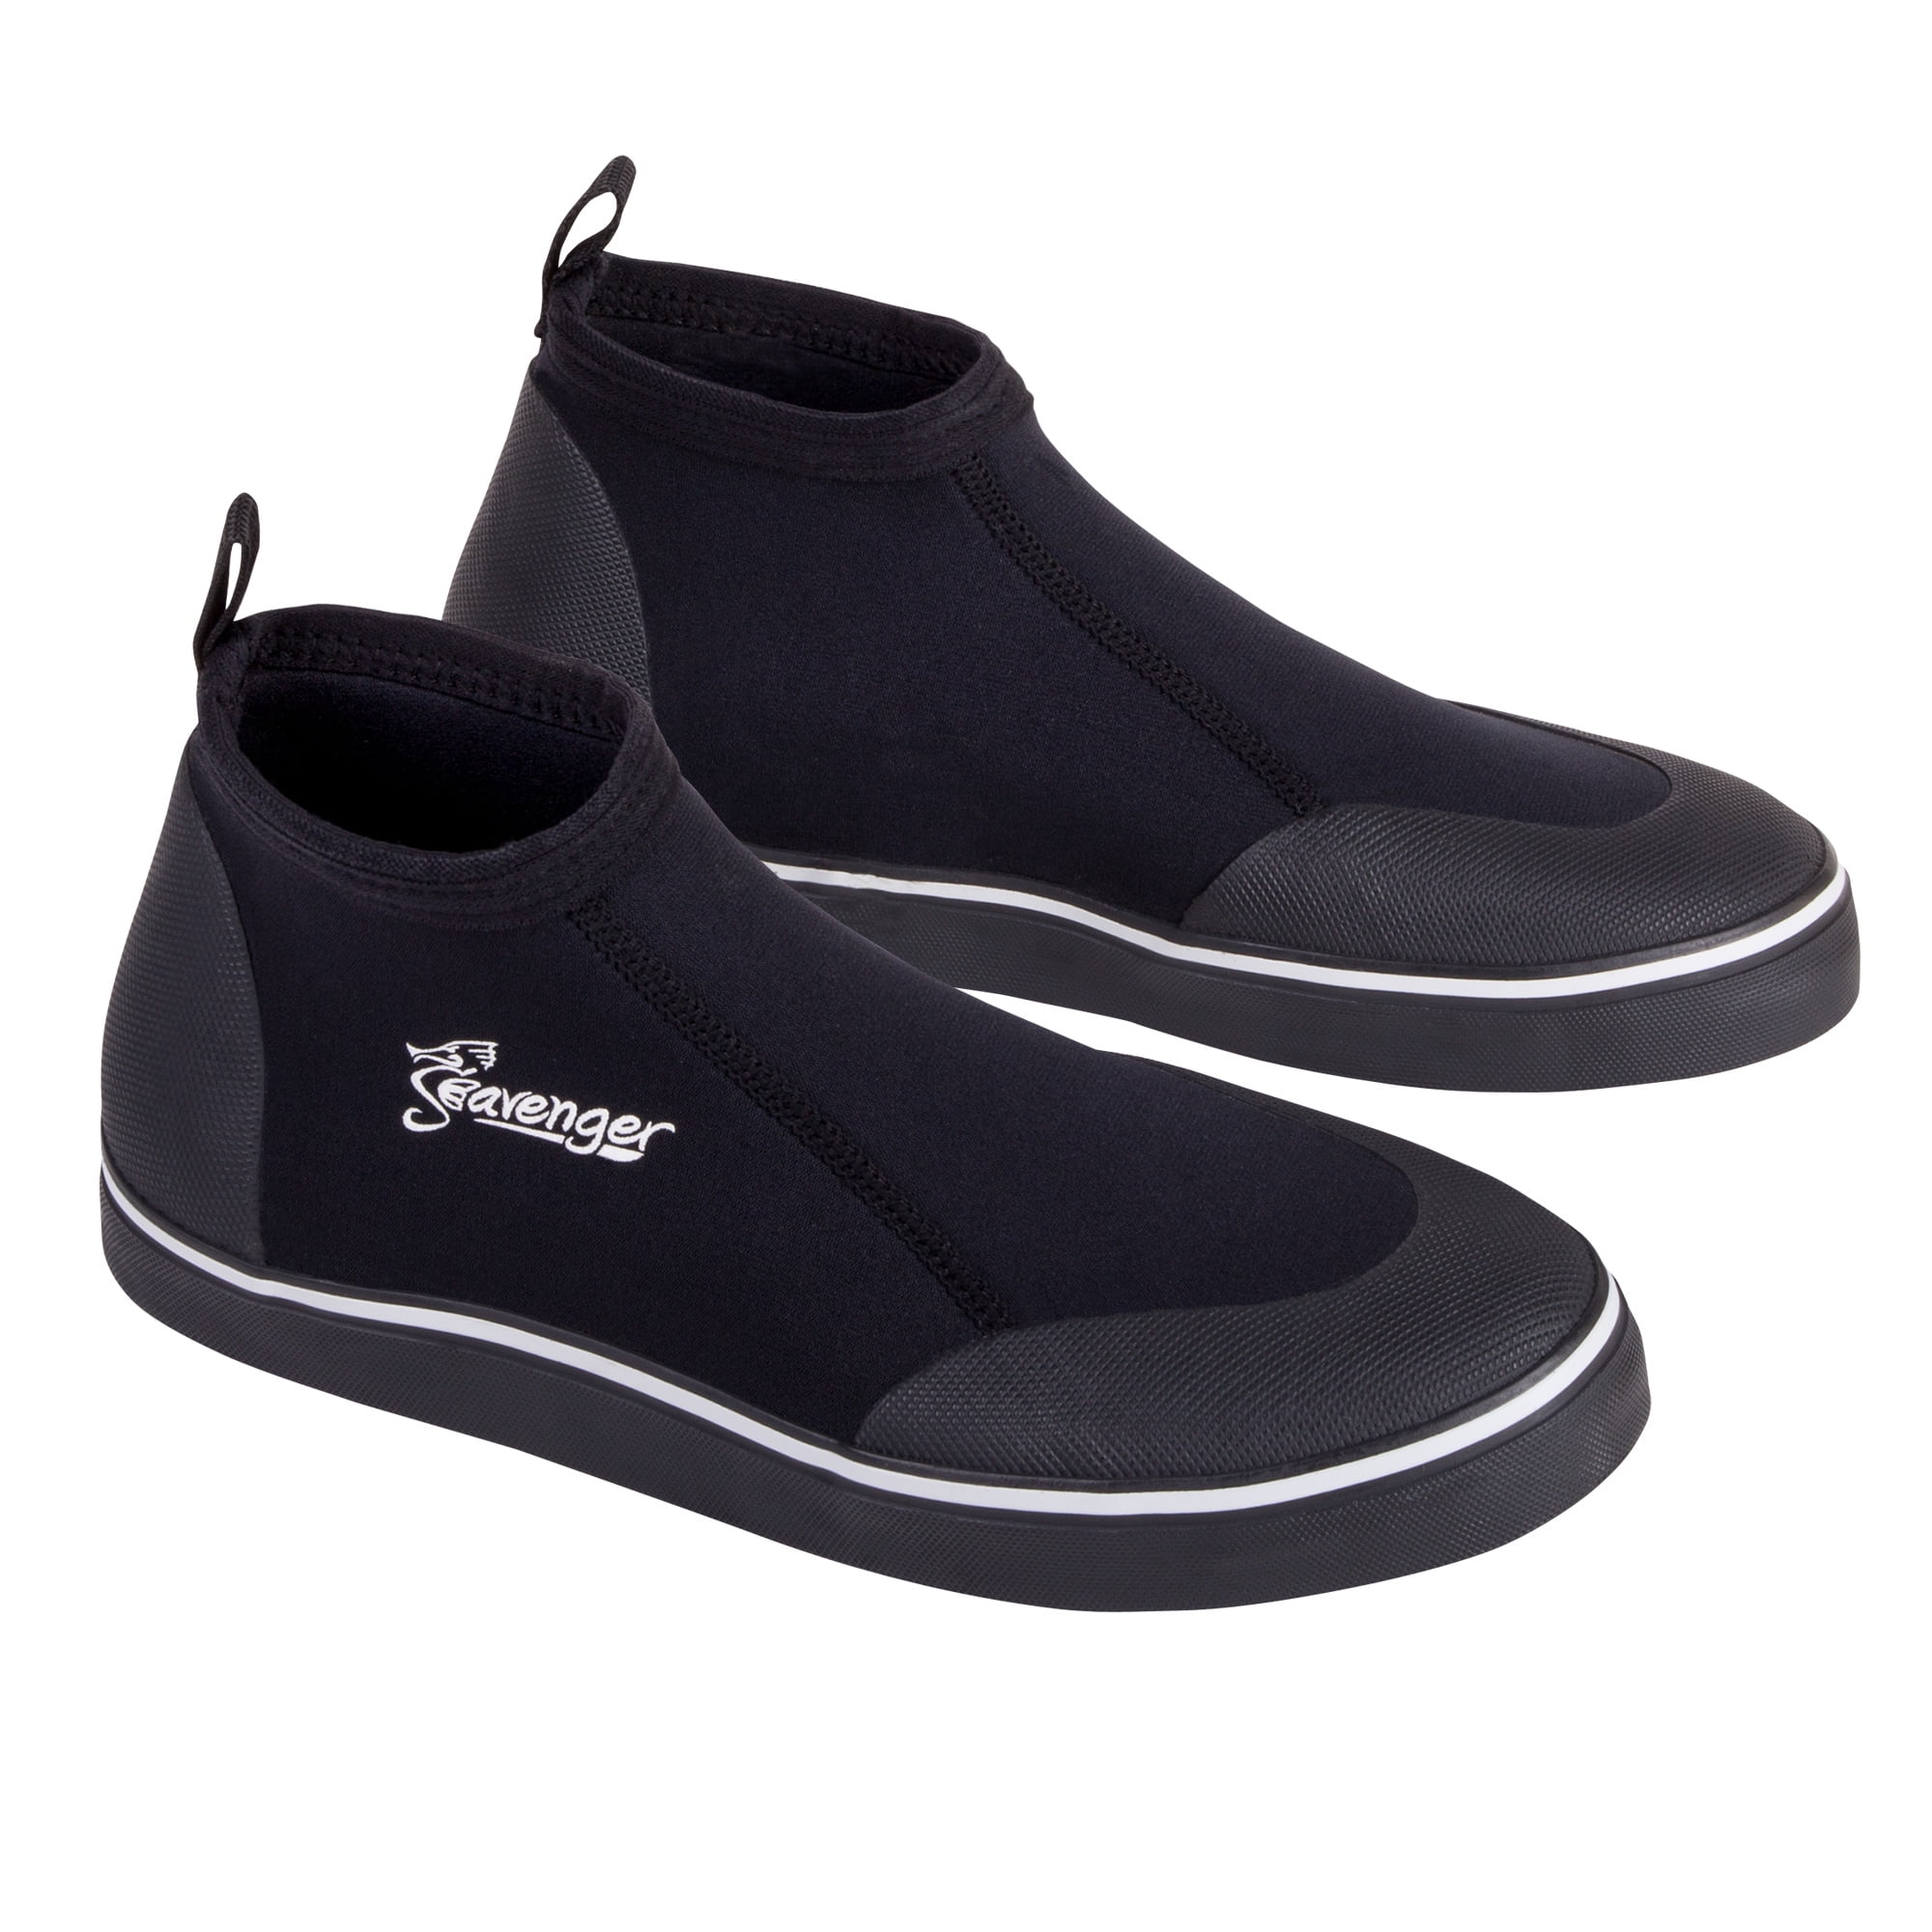 Seavenger Sneaker Style Aqua Shoes 3mm Neoprene High Top Snorkel Dive-Poly Camo 